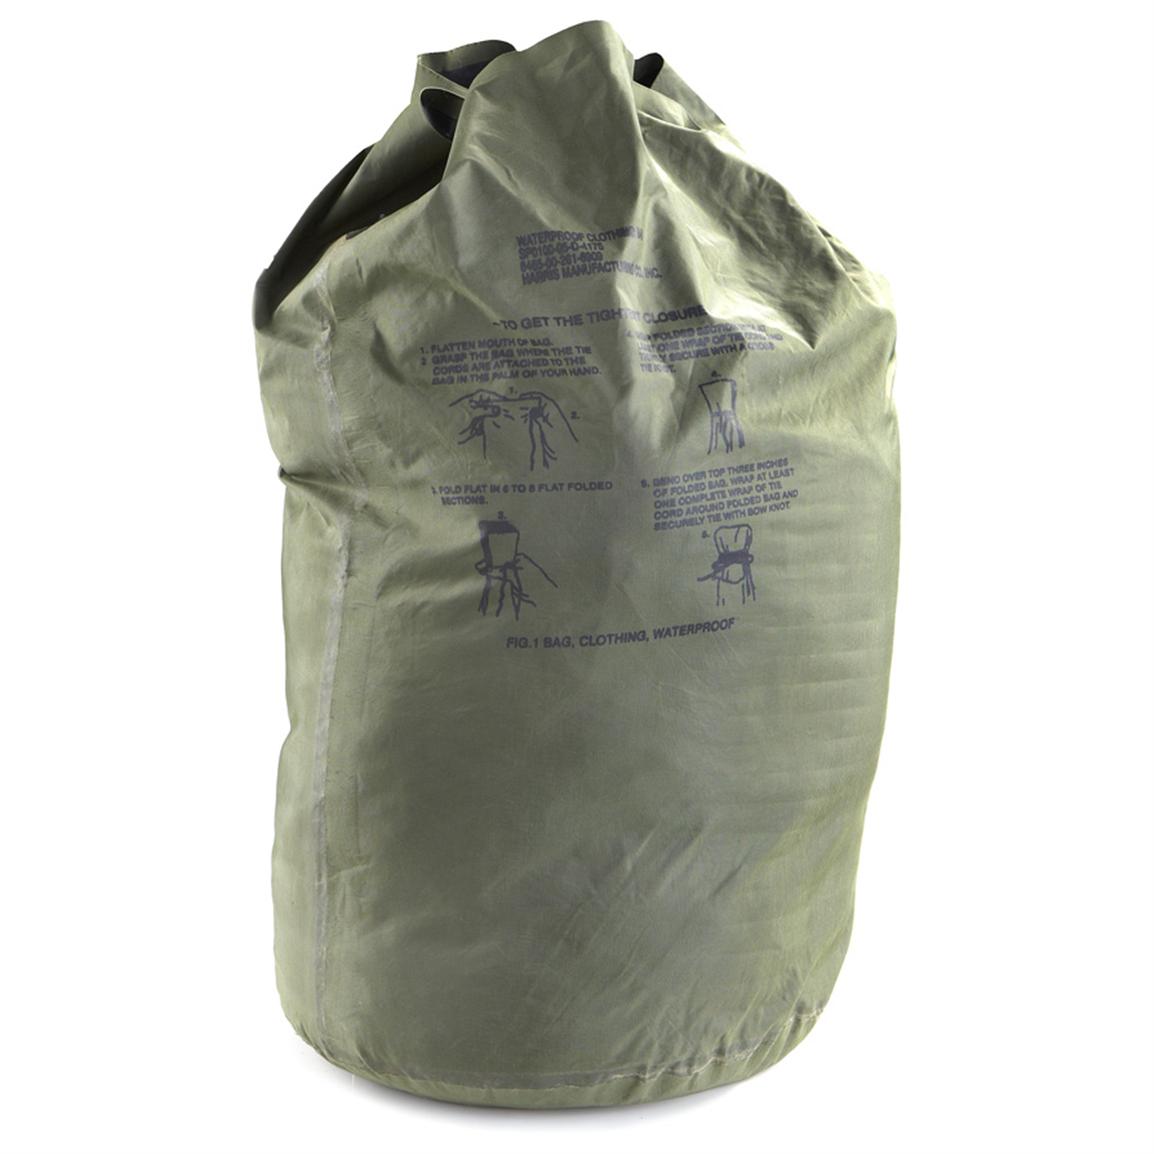 Nylon/Rubber US Military Waterproof Clothing Bag 